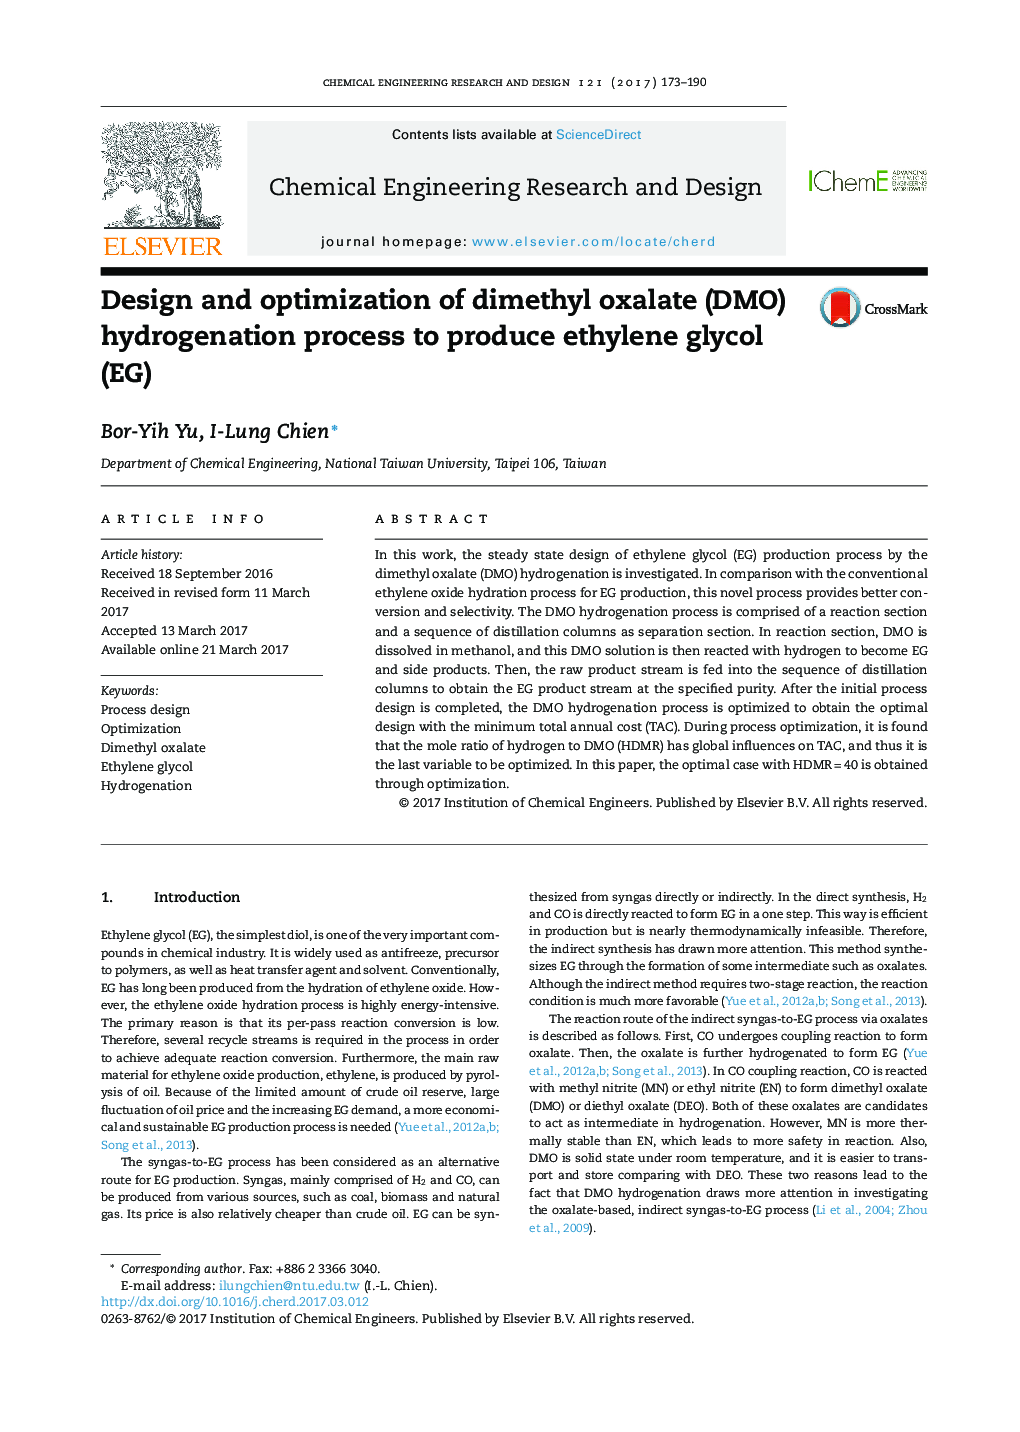 Design and optimization of dimethyl oxalate (DMO) hydrogenation process to produce ethylene glycol (EG)